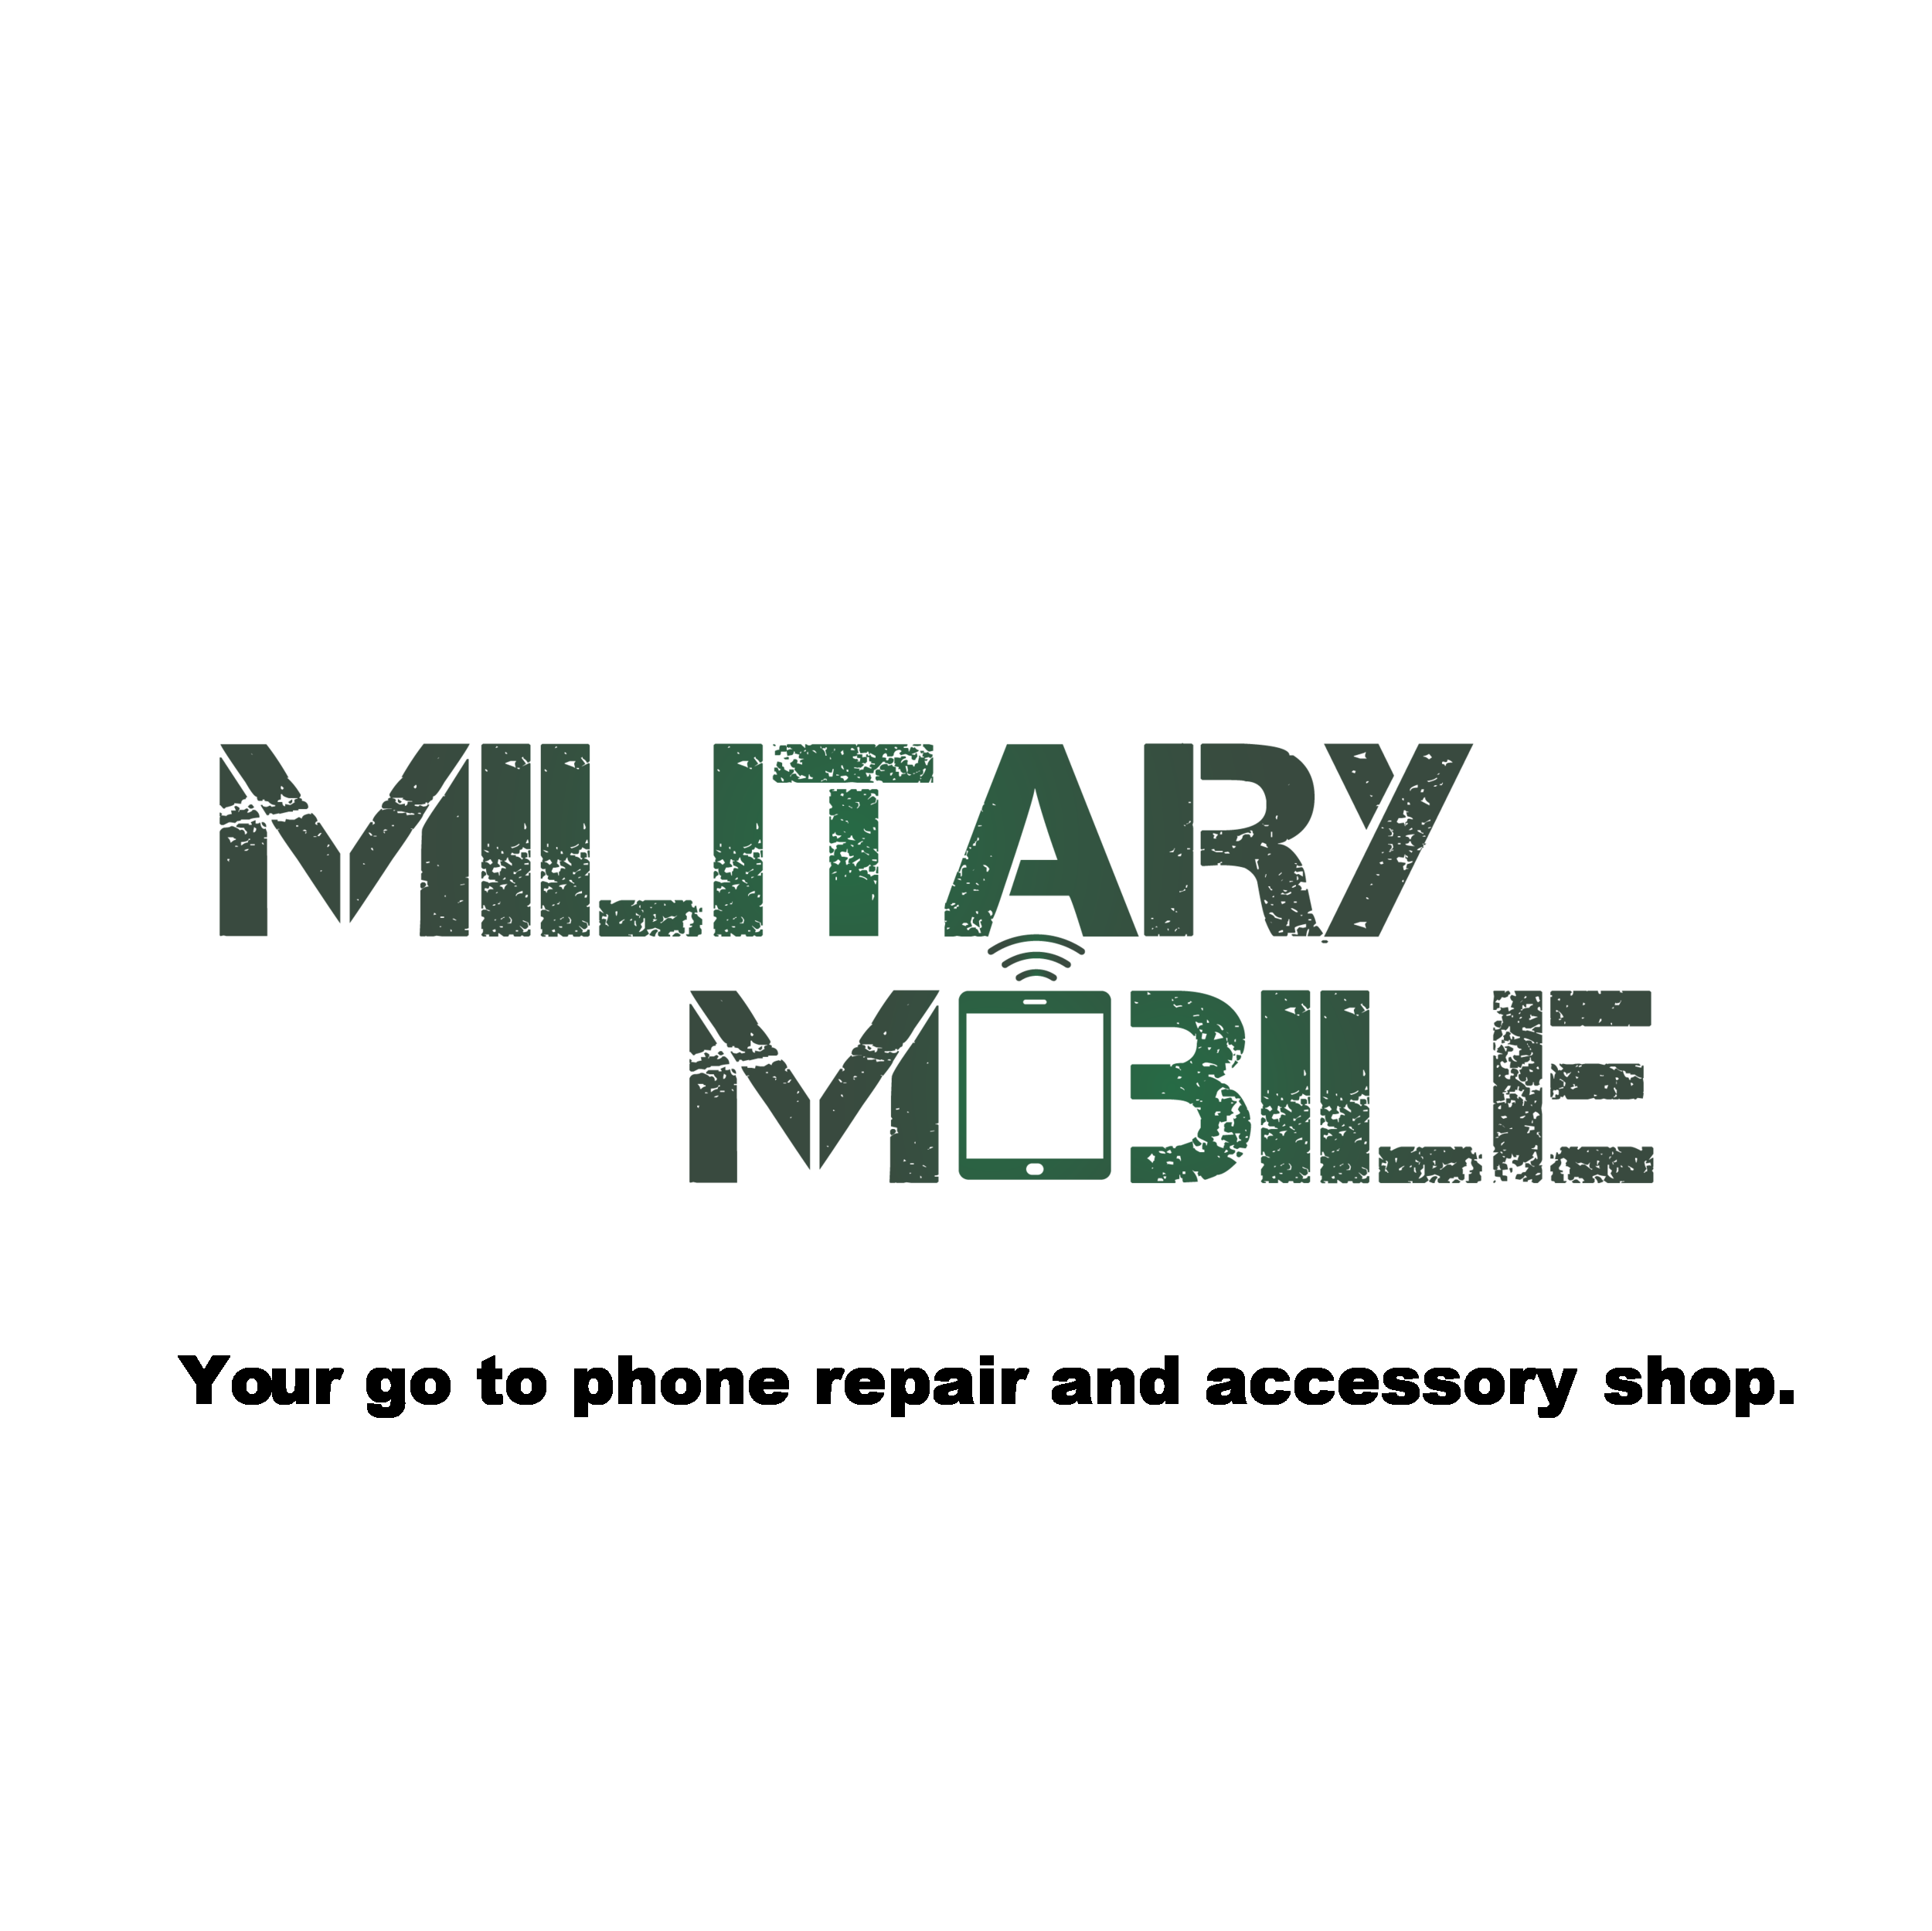 Military Mobile